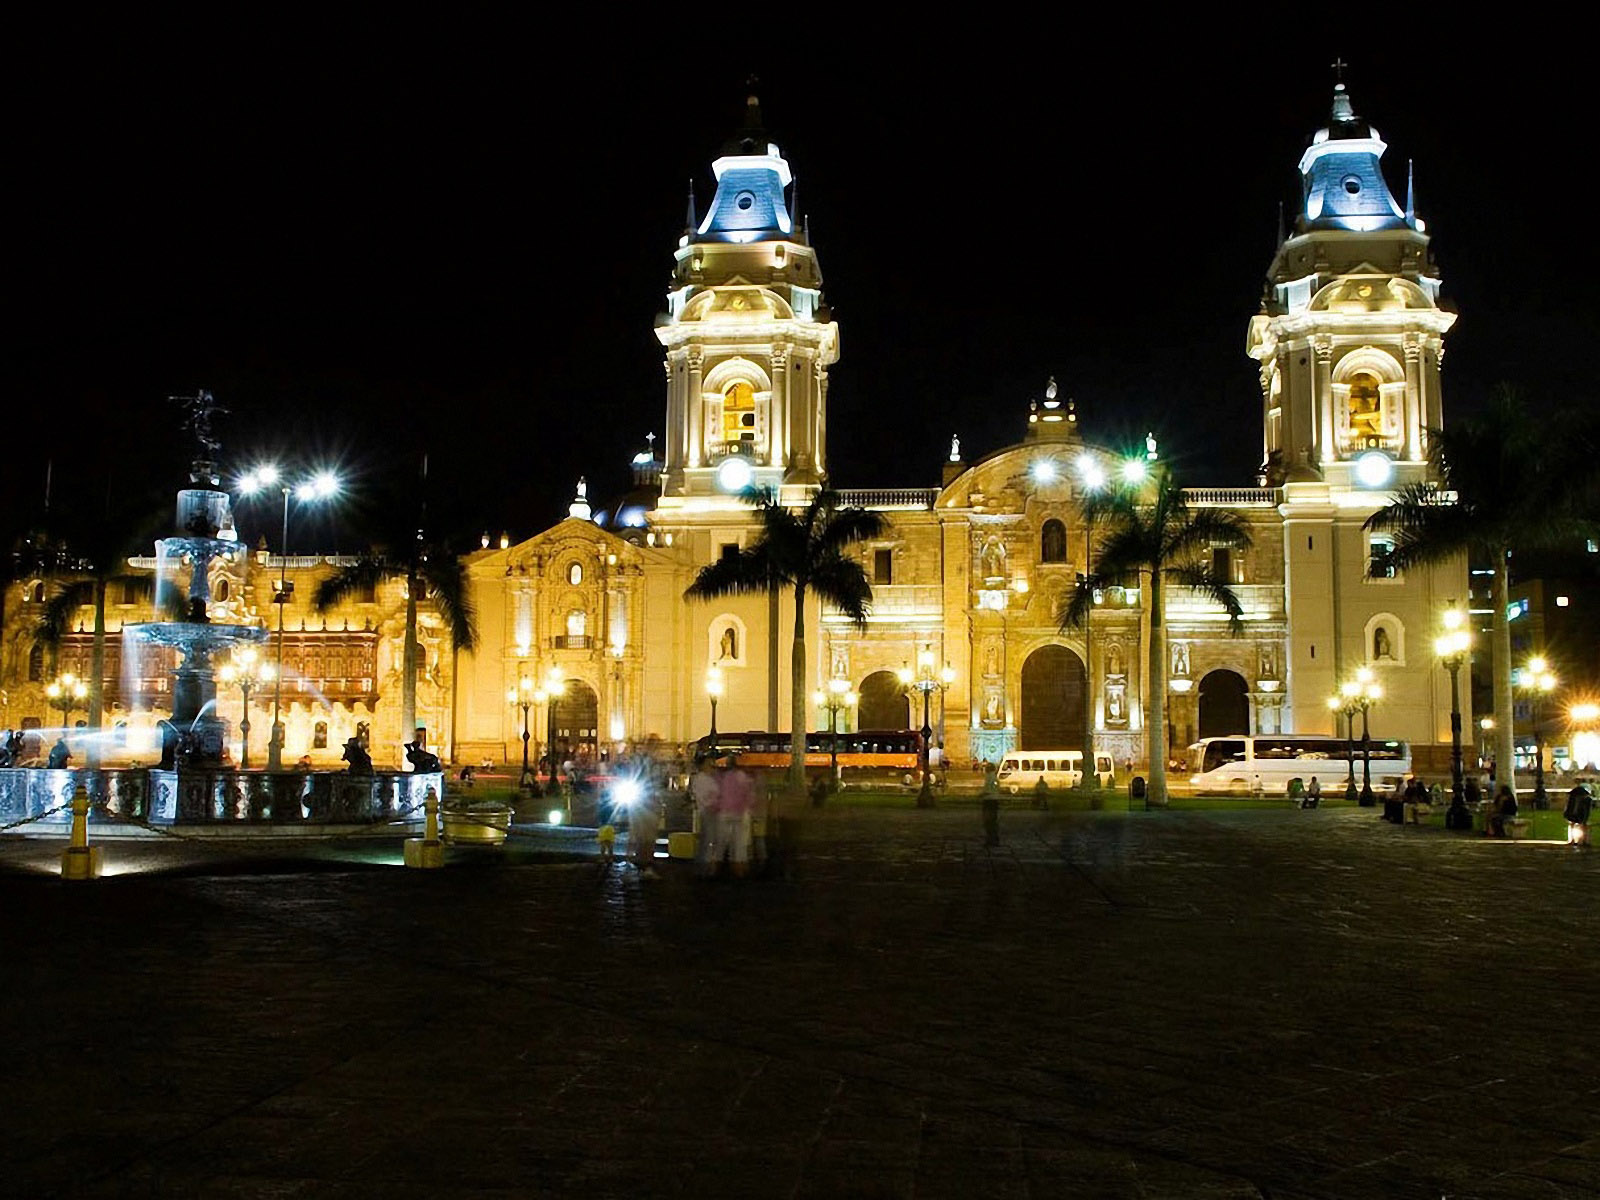 Capital of Peru 1600x1200 WallpapersLima 1600x1200 Wallpapers